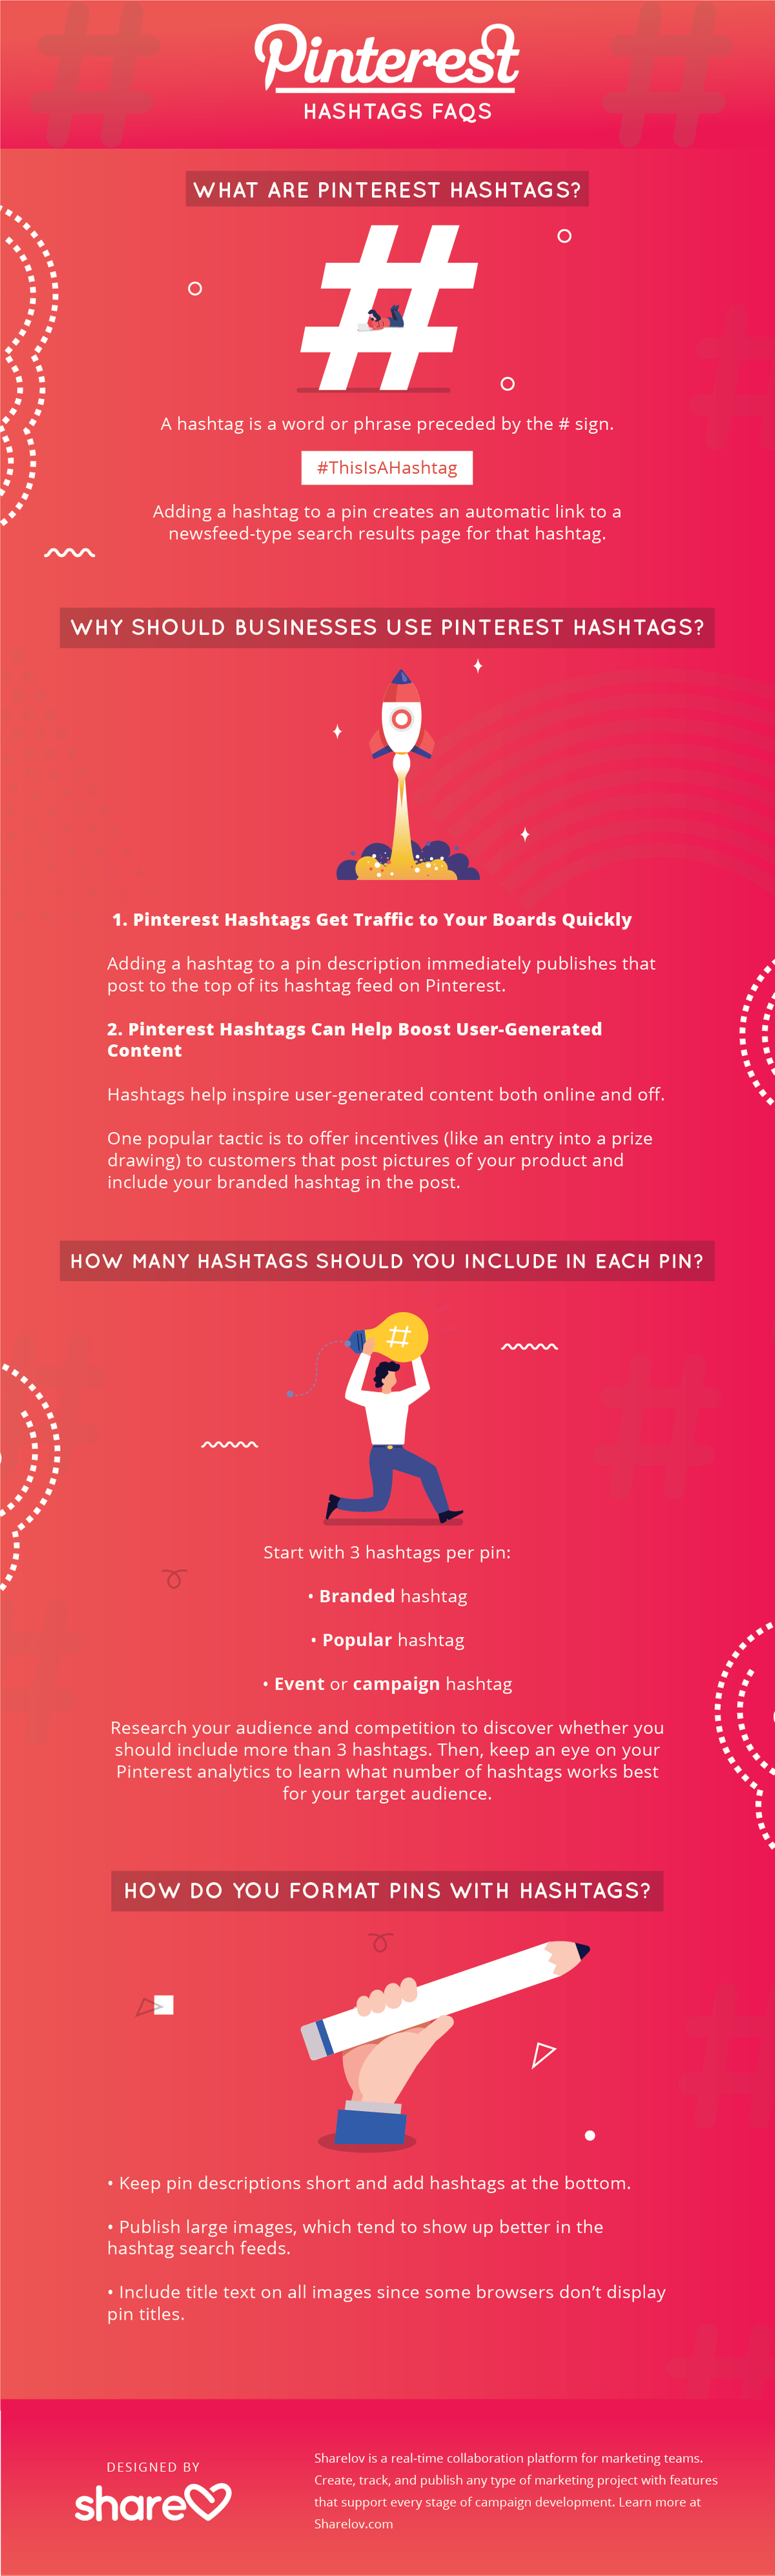 Pinterest hashtag FAQs infographic